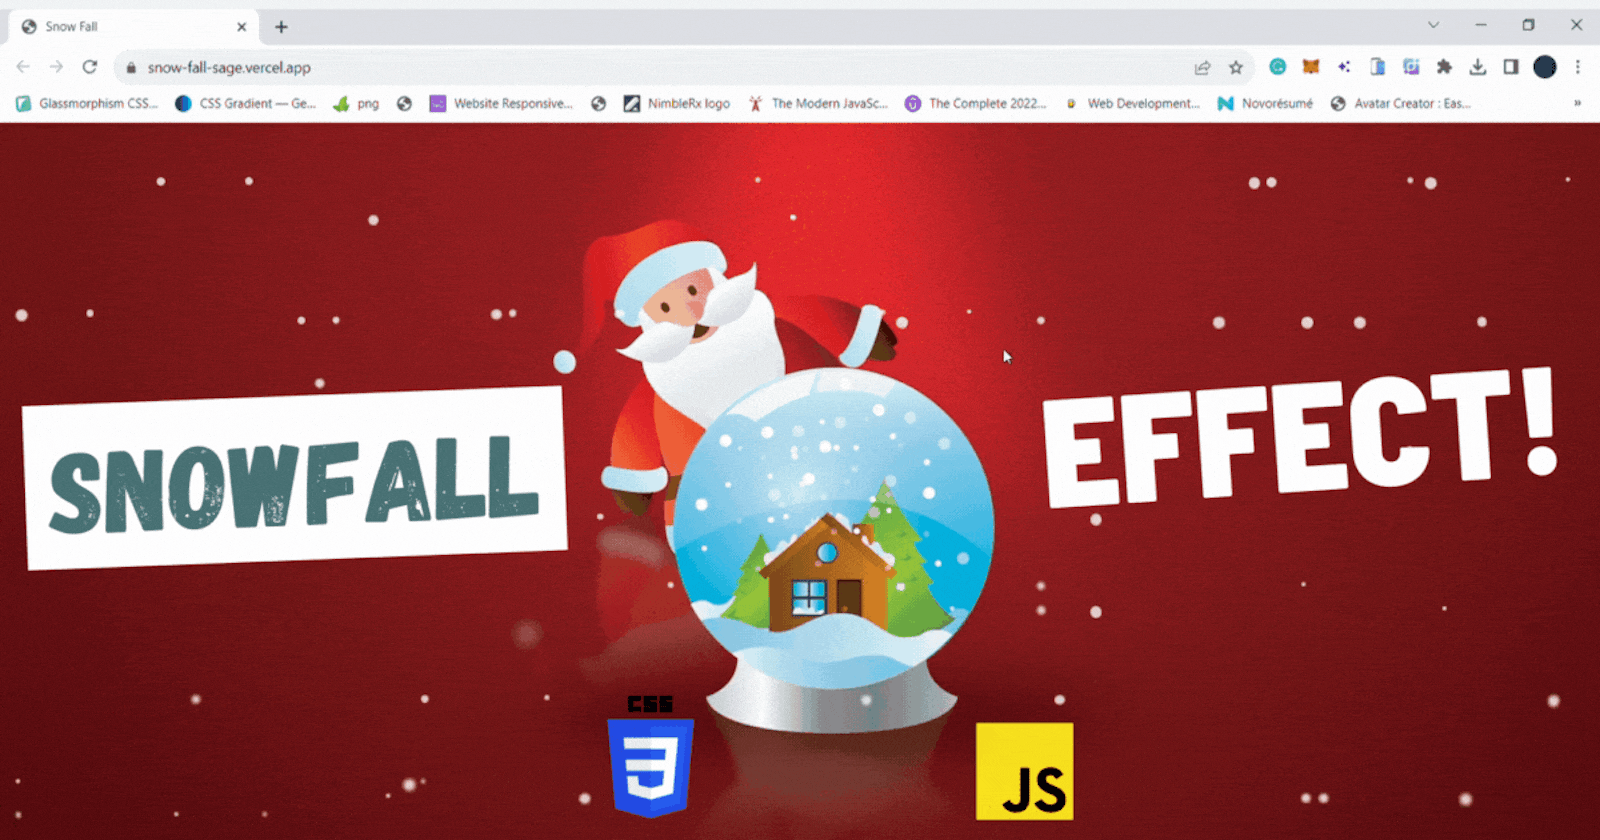 SnowFall effect using CSS and JavaScript Animations